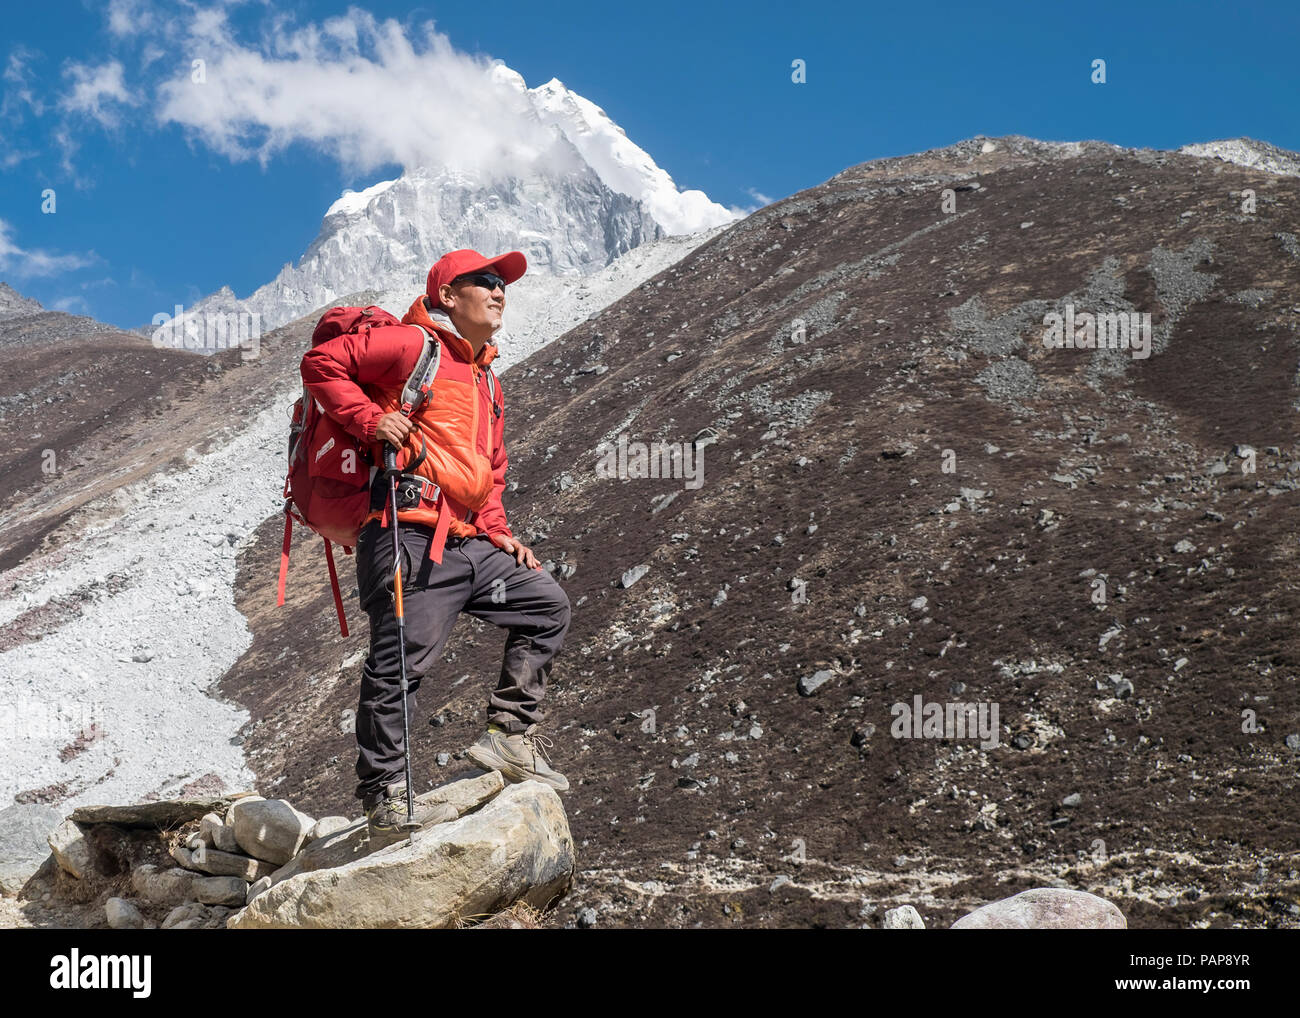 Nepal, Solo Khumbu, Everest, Sagamartha National Park, Mountaineers hiking the Himalayas Stock Photo